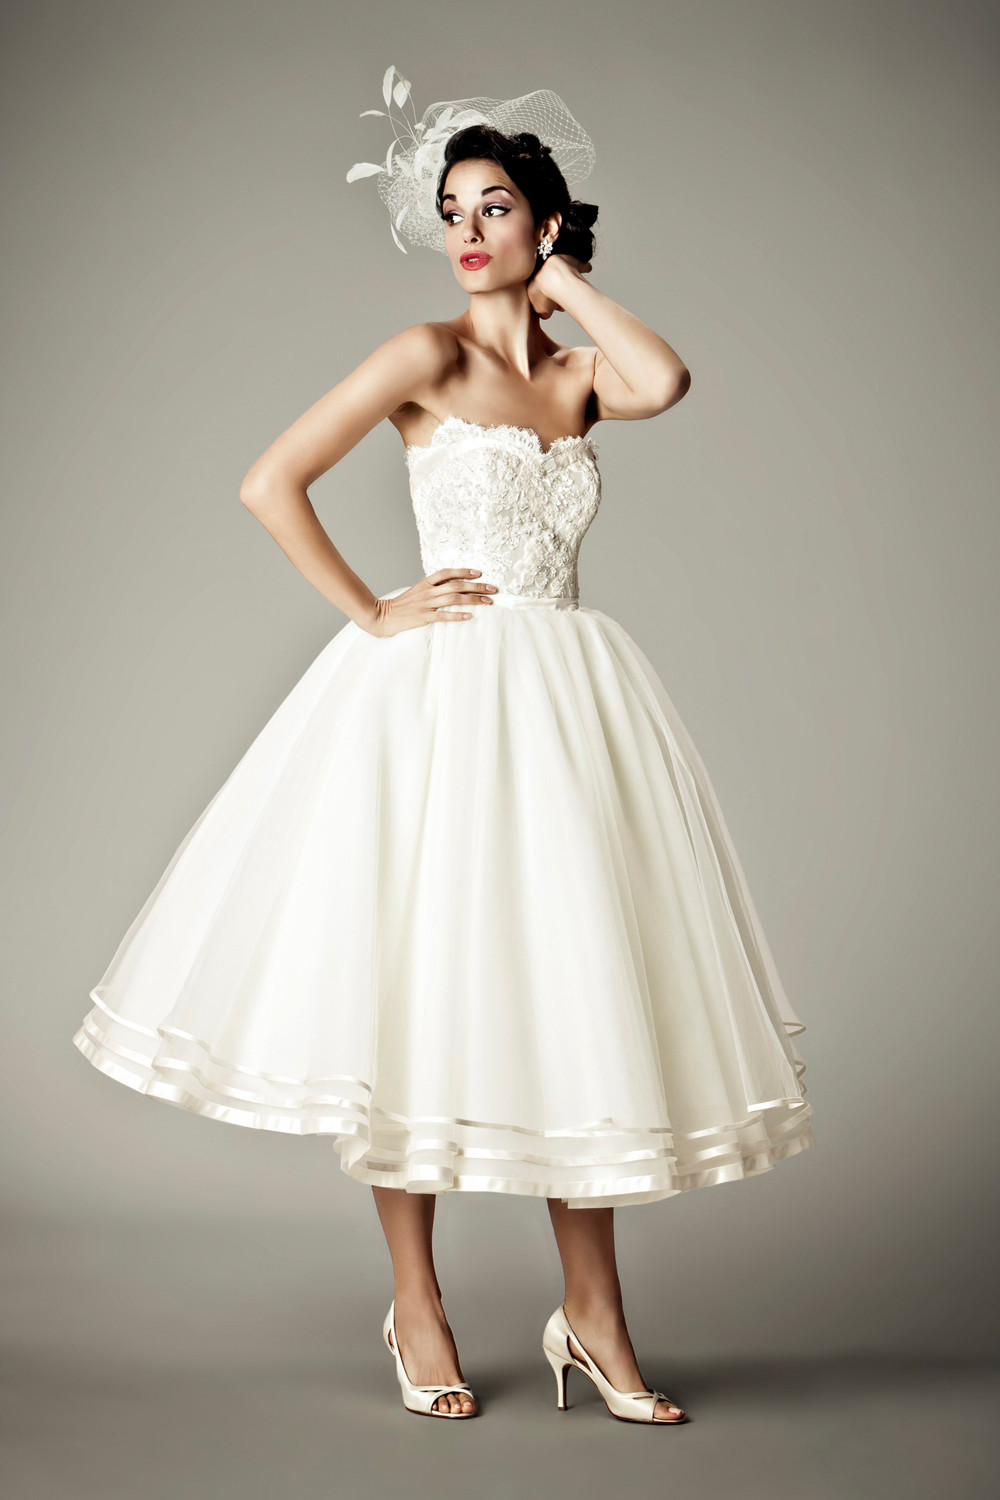 Vintage Inspired Wedding Dress
 GoS Bridal trends 2012 Vintage inspired wedding dresses